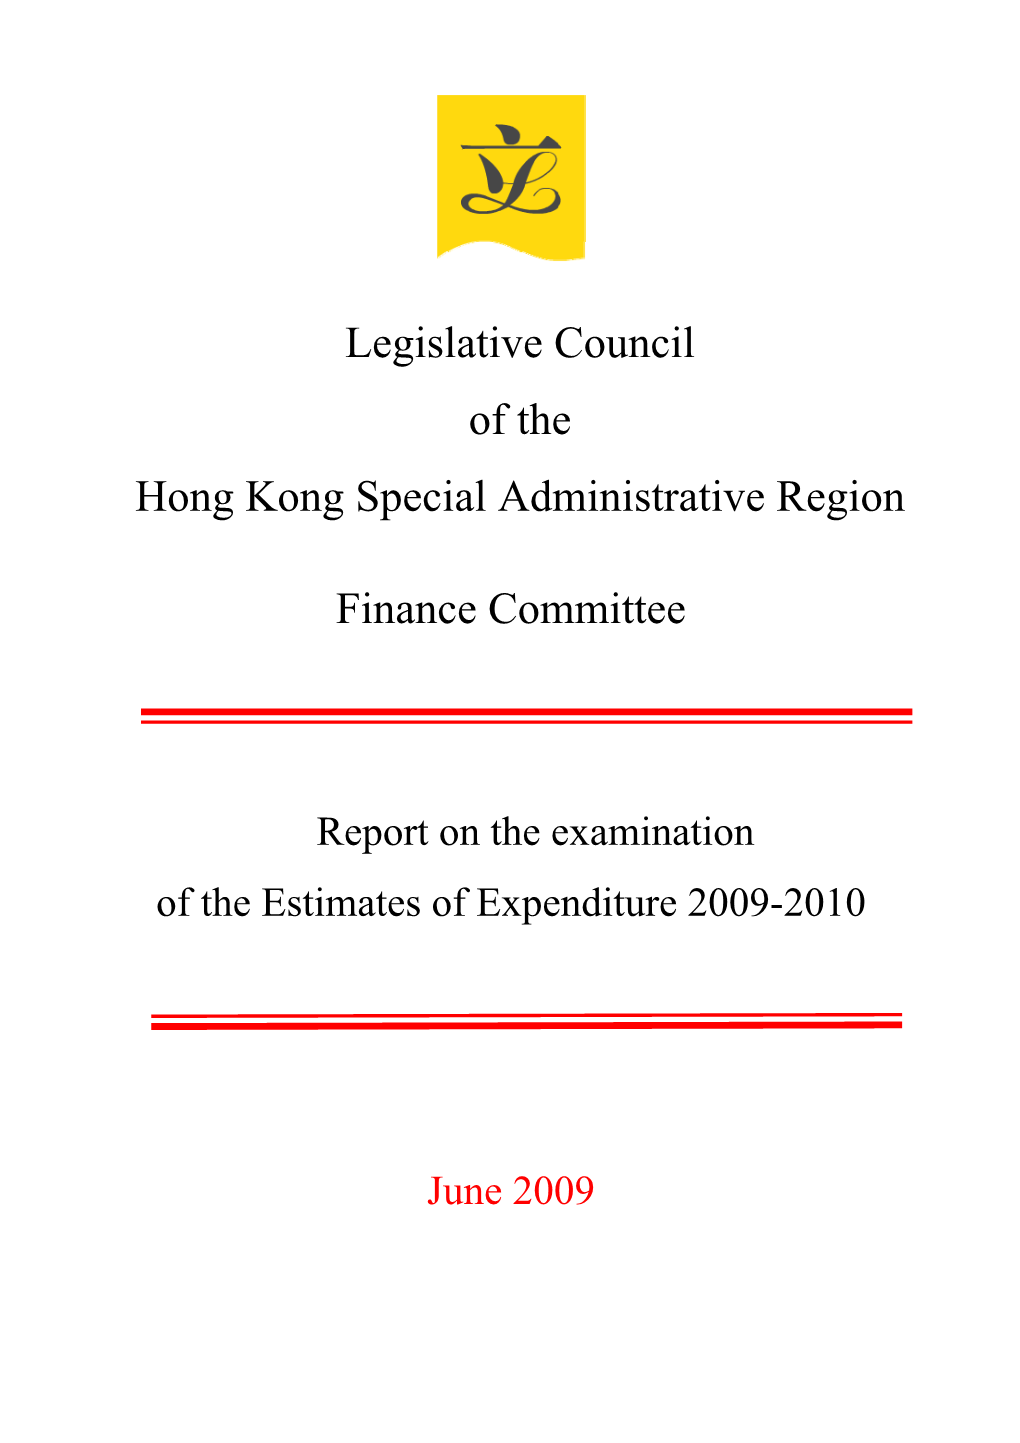 Legislative Council of the Hong Kong Special Administrative Region